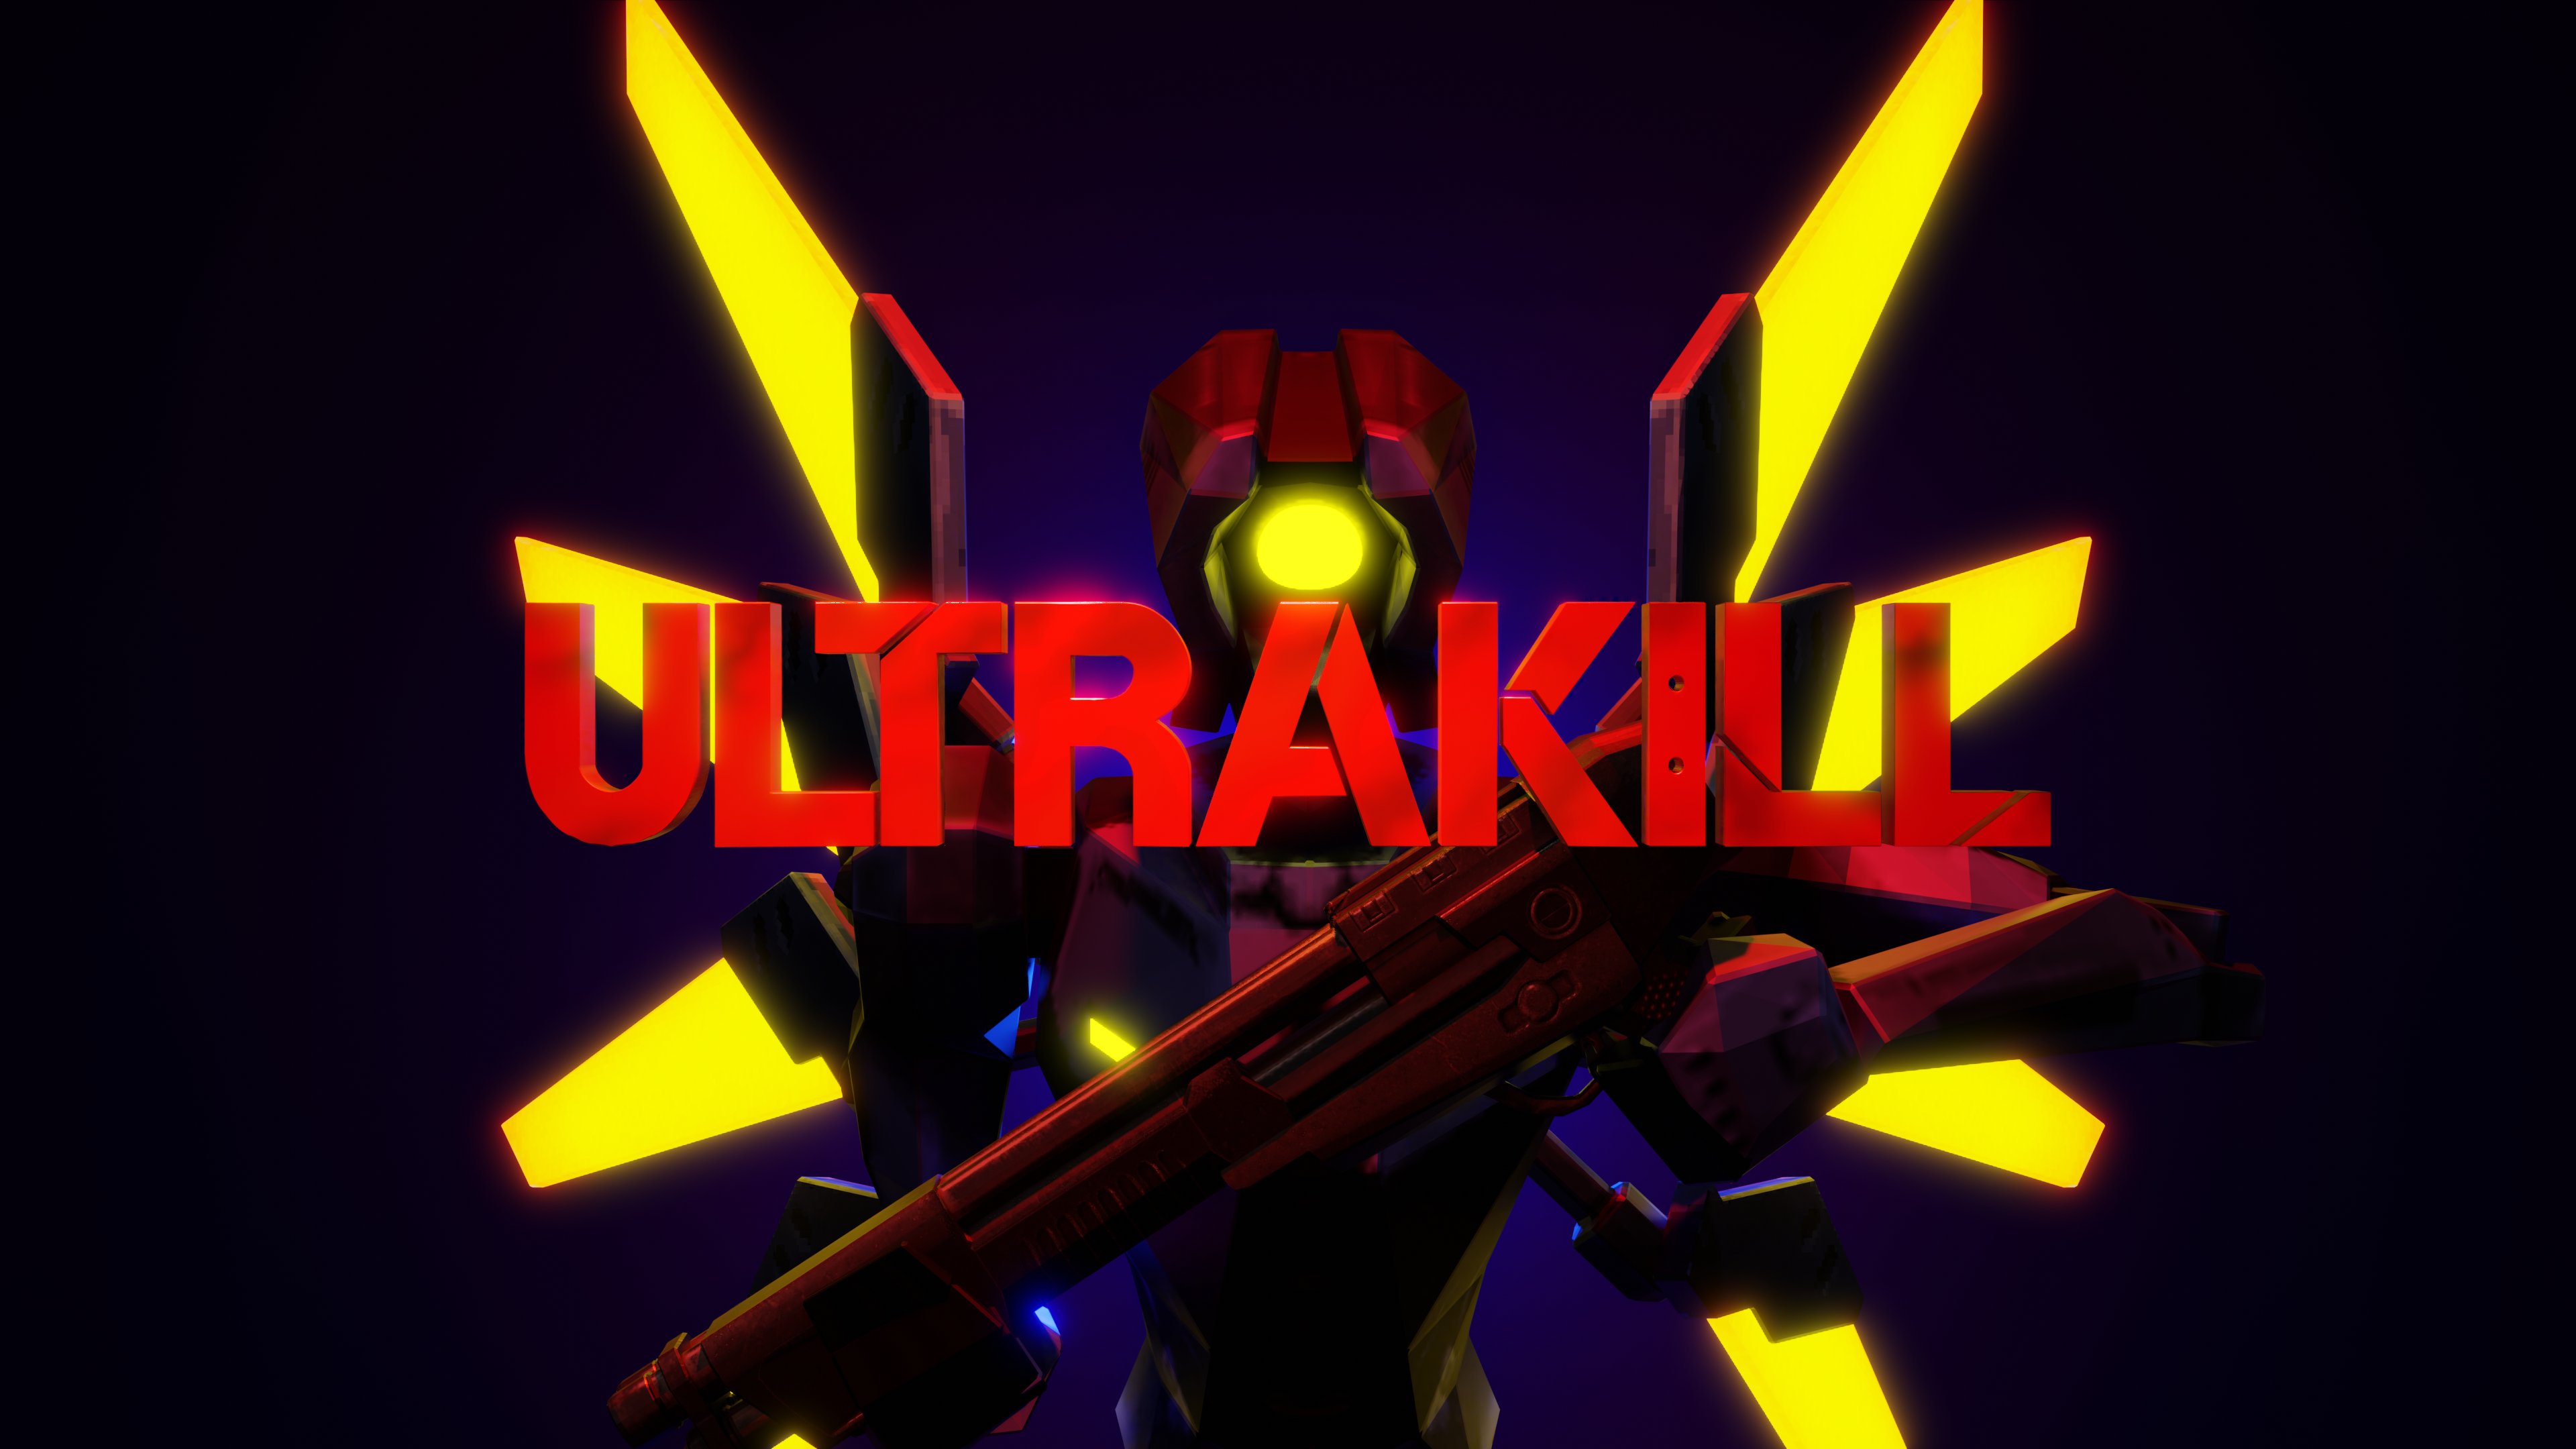 Ultrakill 3d models. ULTRAKILL. V1 ULTRAKILL. ULTRAKILL обои. ULTRAKILL Art.